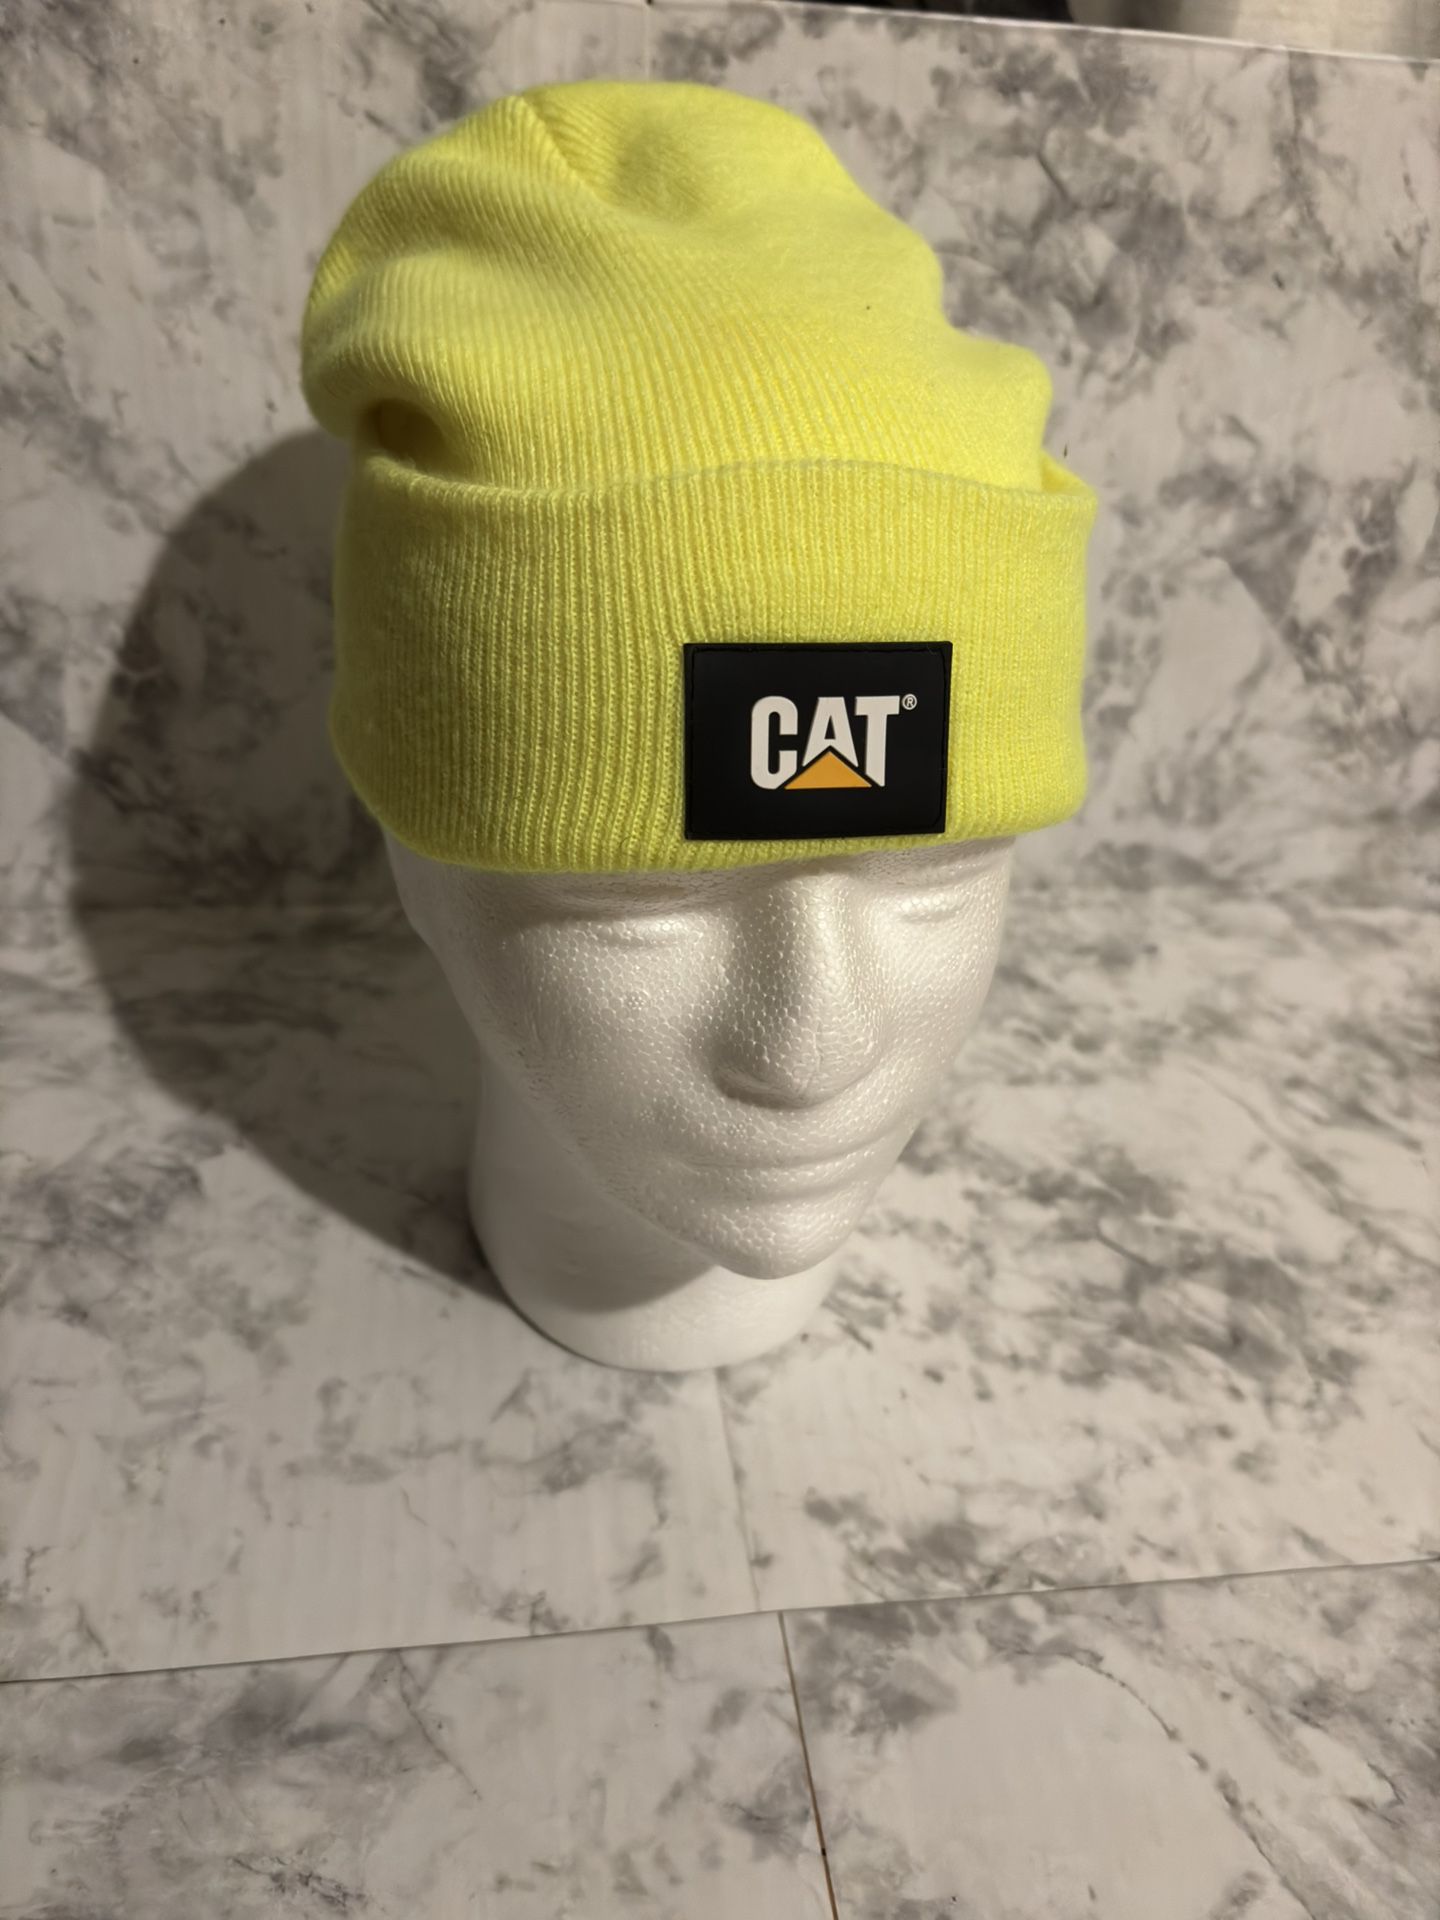 CAT High-Vis Cuff Bright Yellow Winter Hat Beanie 